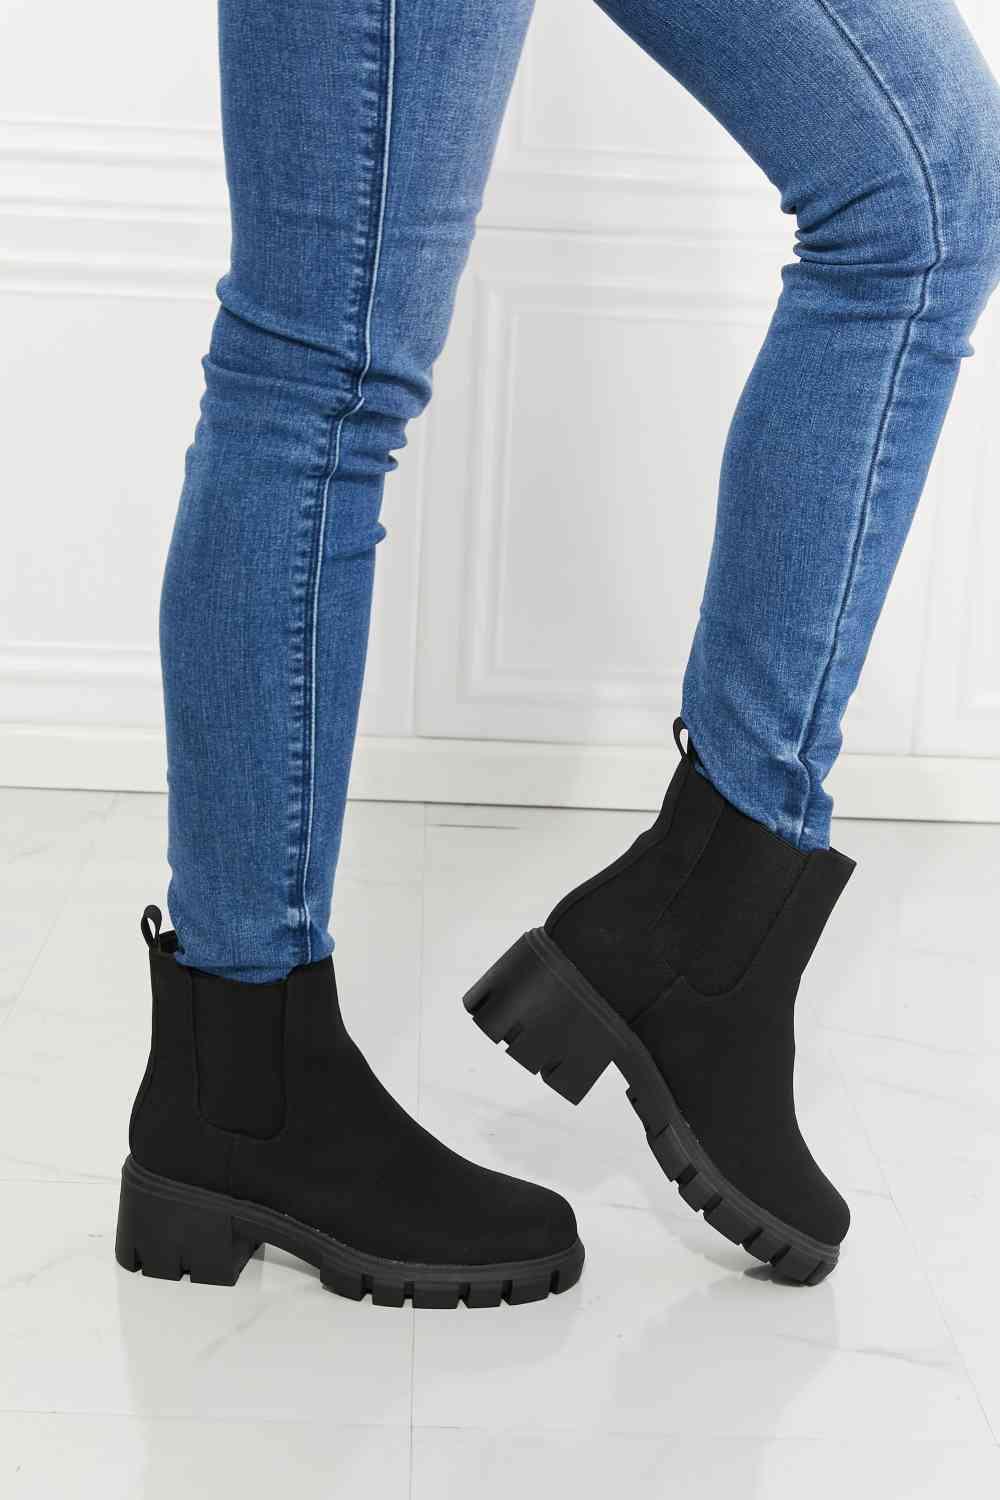 MMShoes Work For It Matte Lug Sole Chelsea Boots in Black - Bona Fide Fashion